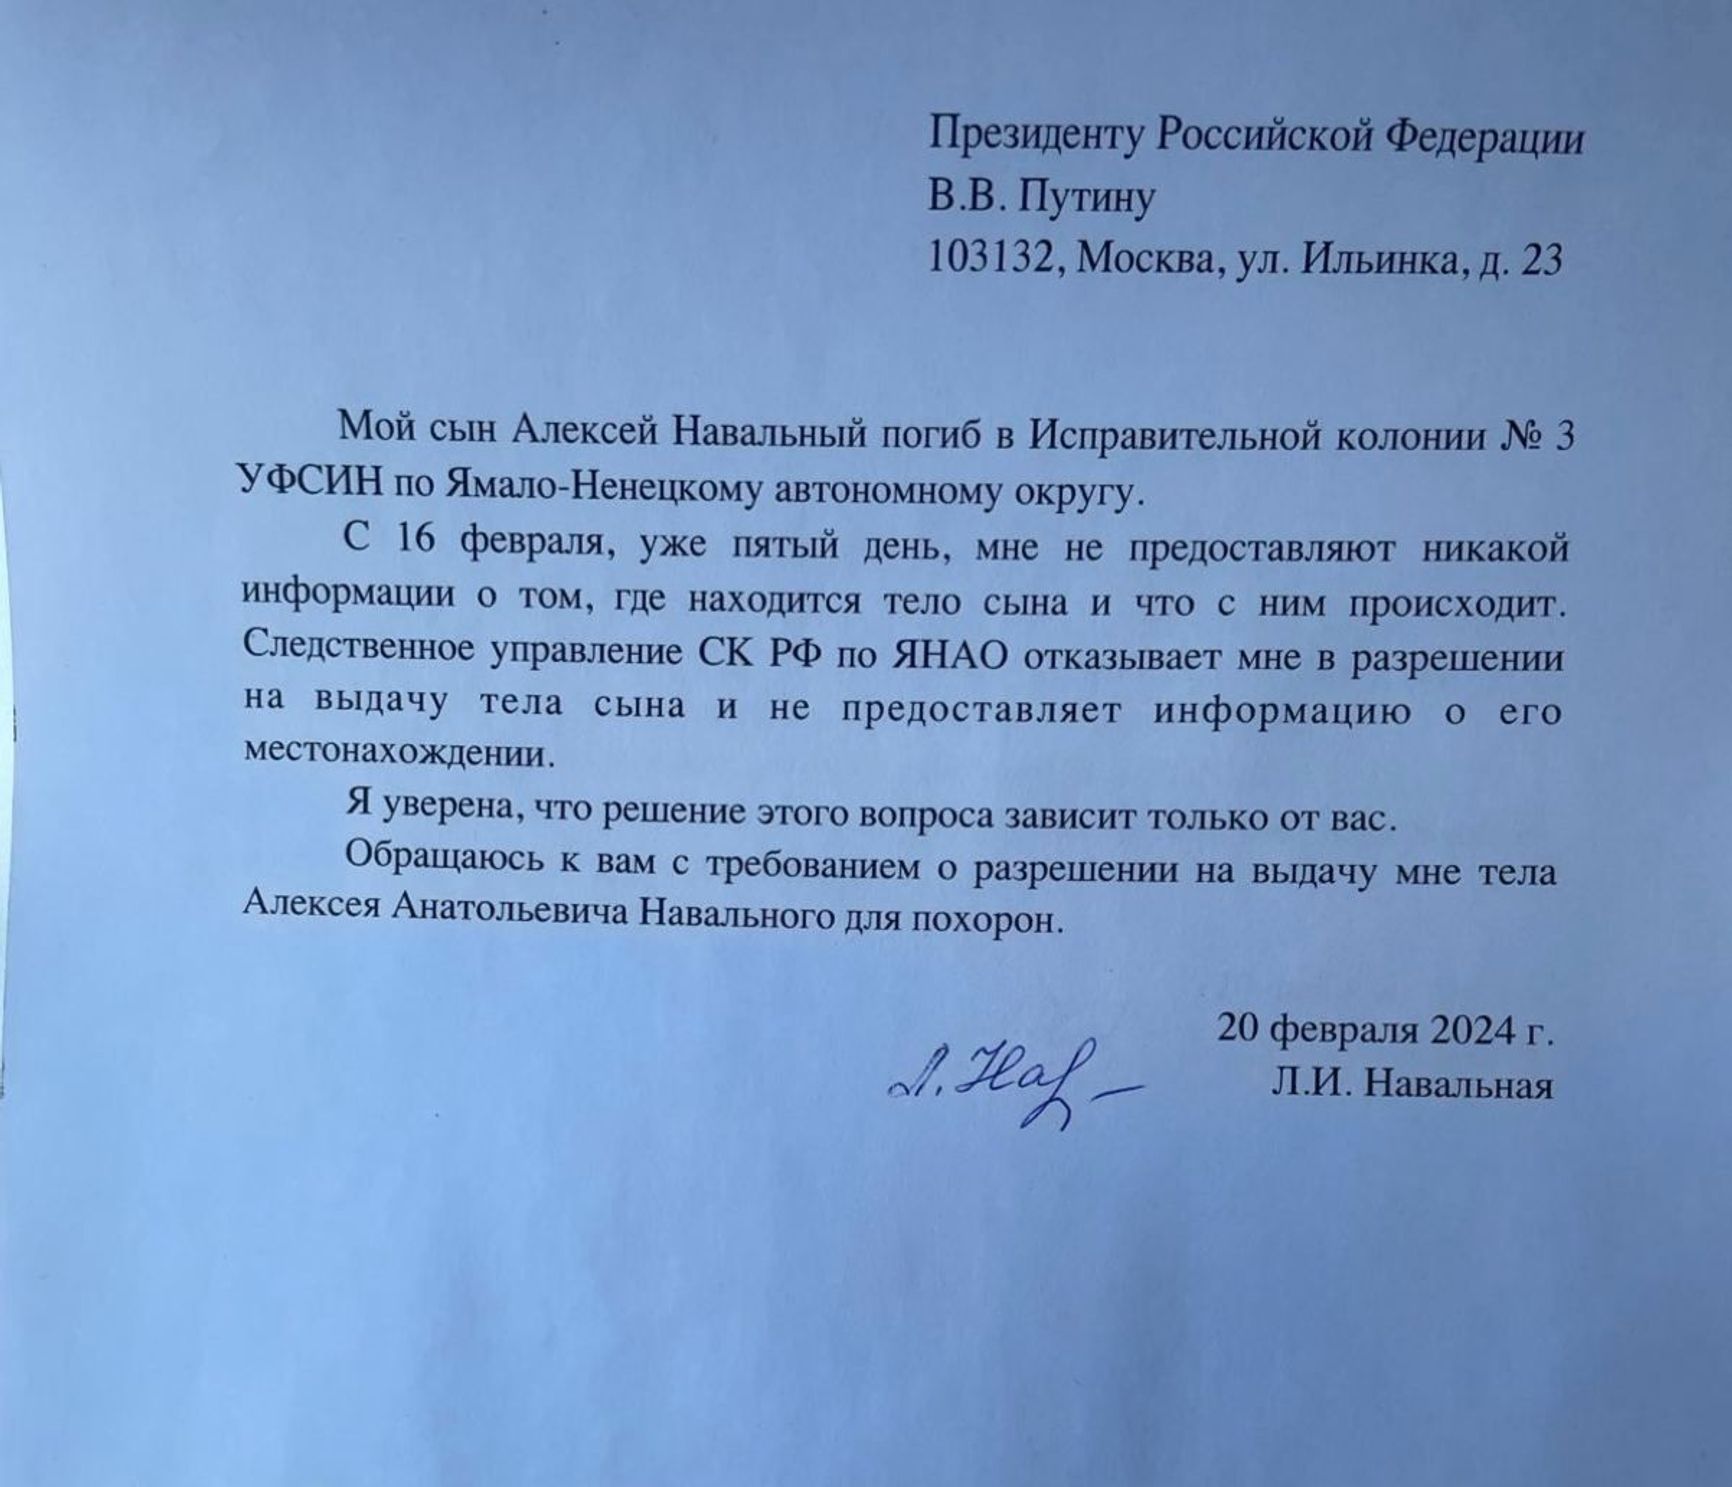 Lyudmila Navalnaya's written appeal to Vladimir Putin, demanding that Navalny's body be released to his family